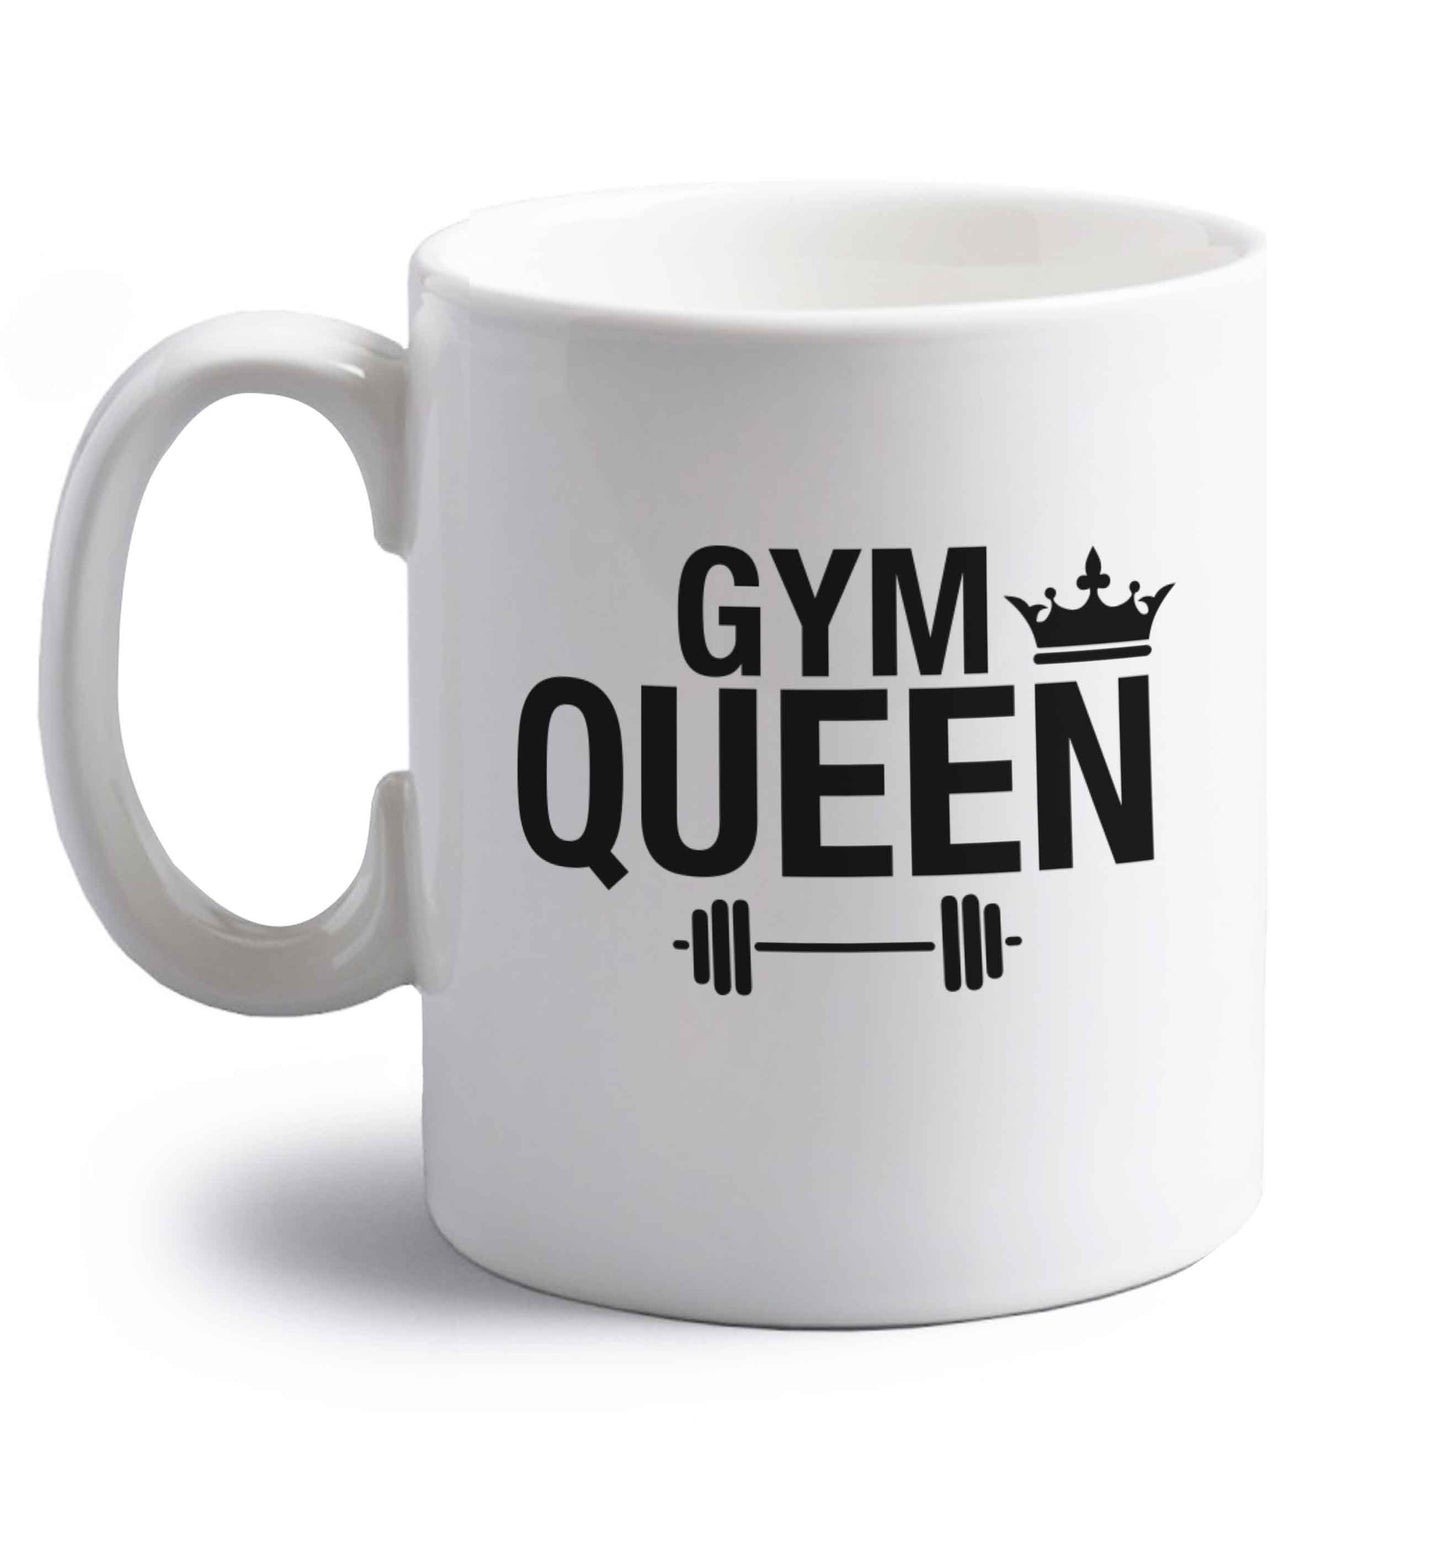 Gym queen right handed white ceramic mug 